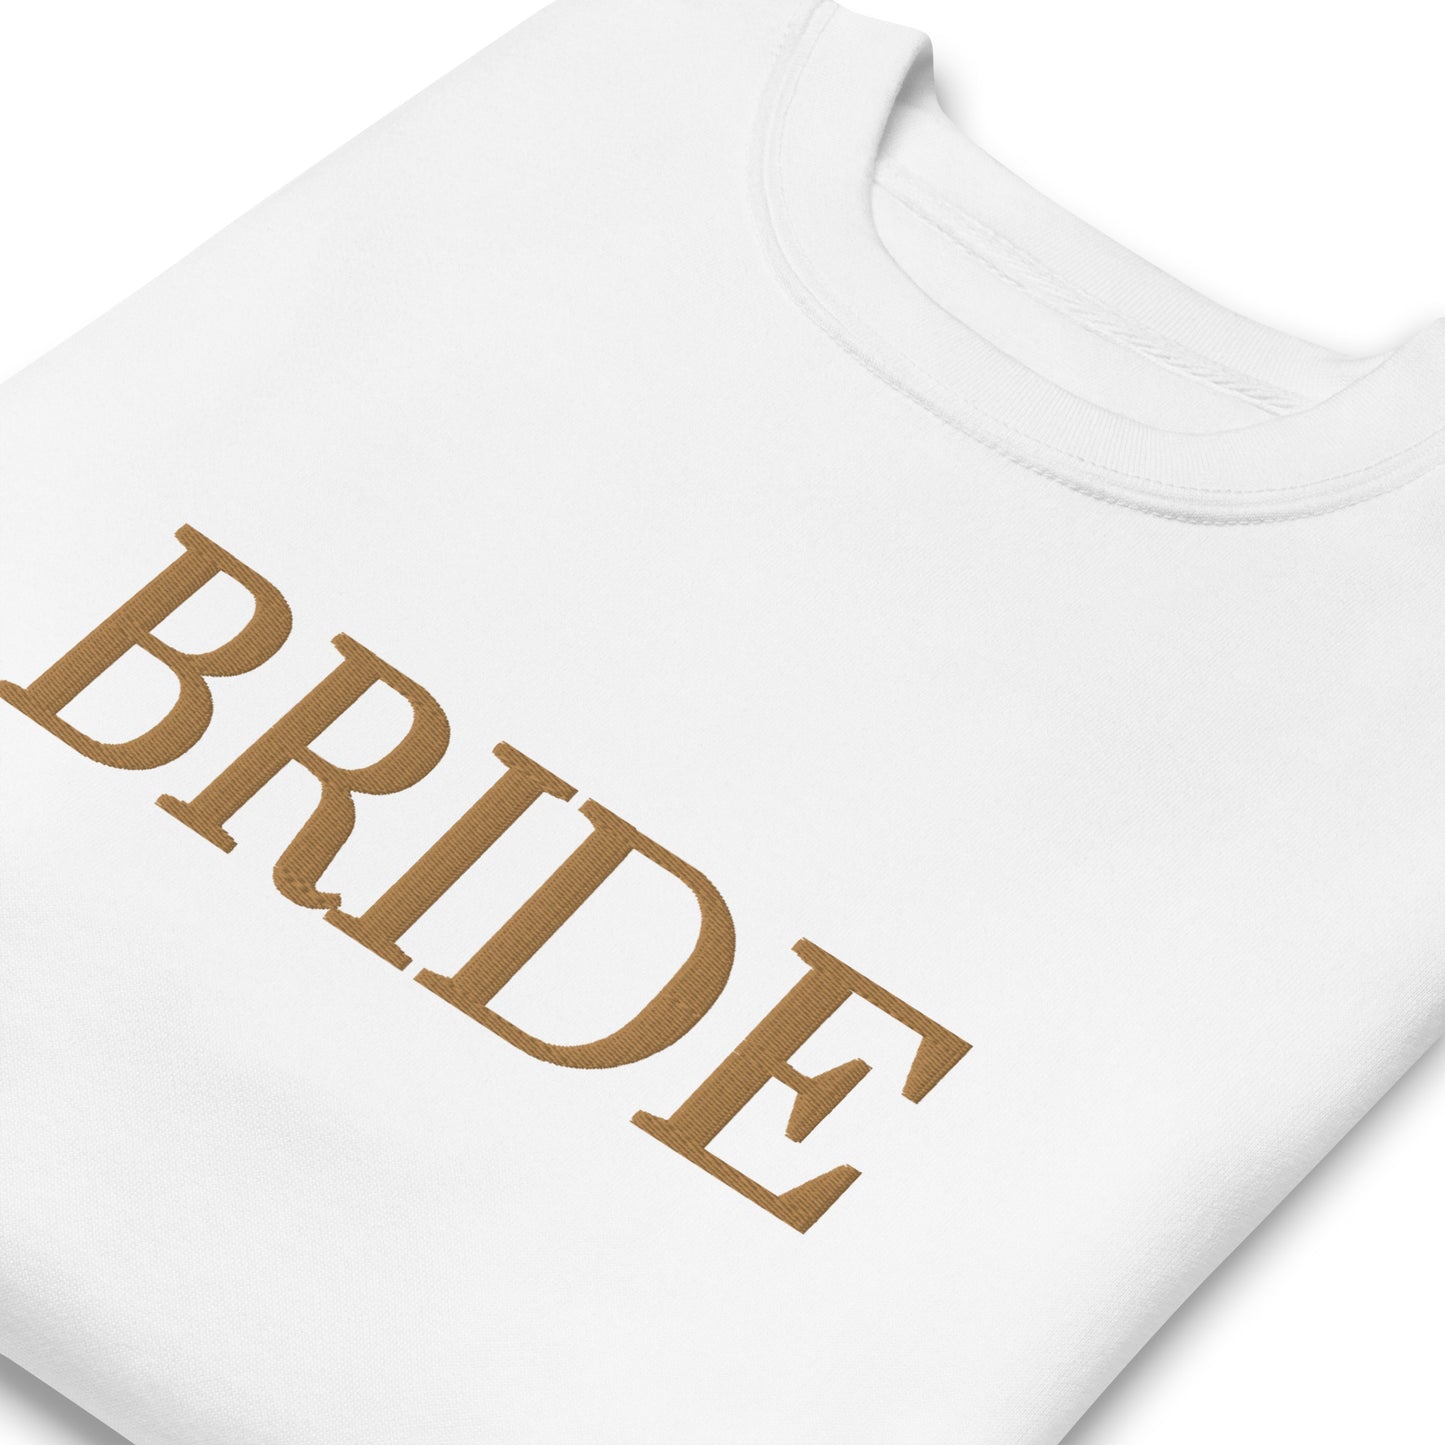 Bride | Crewneck | Embroidered